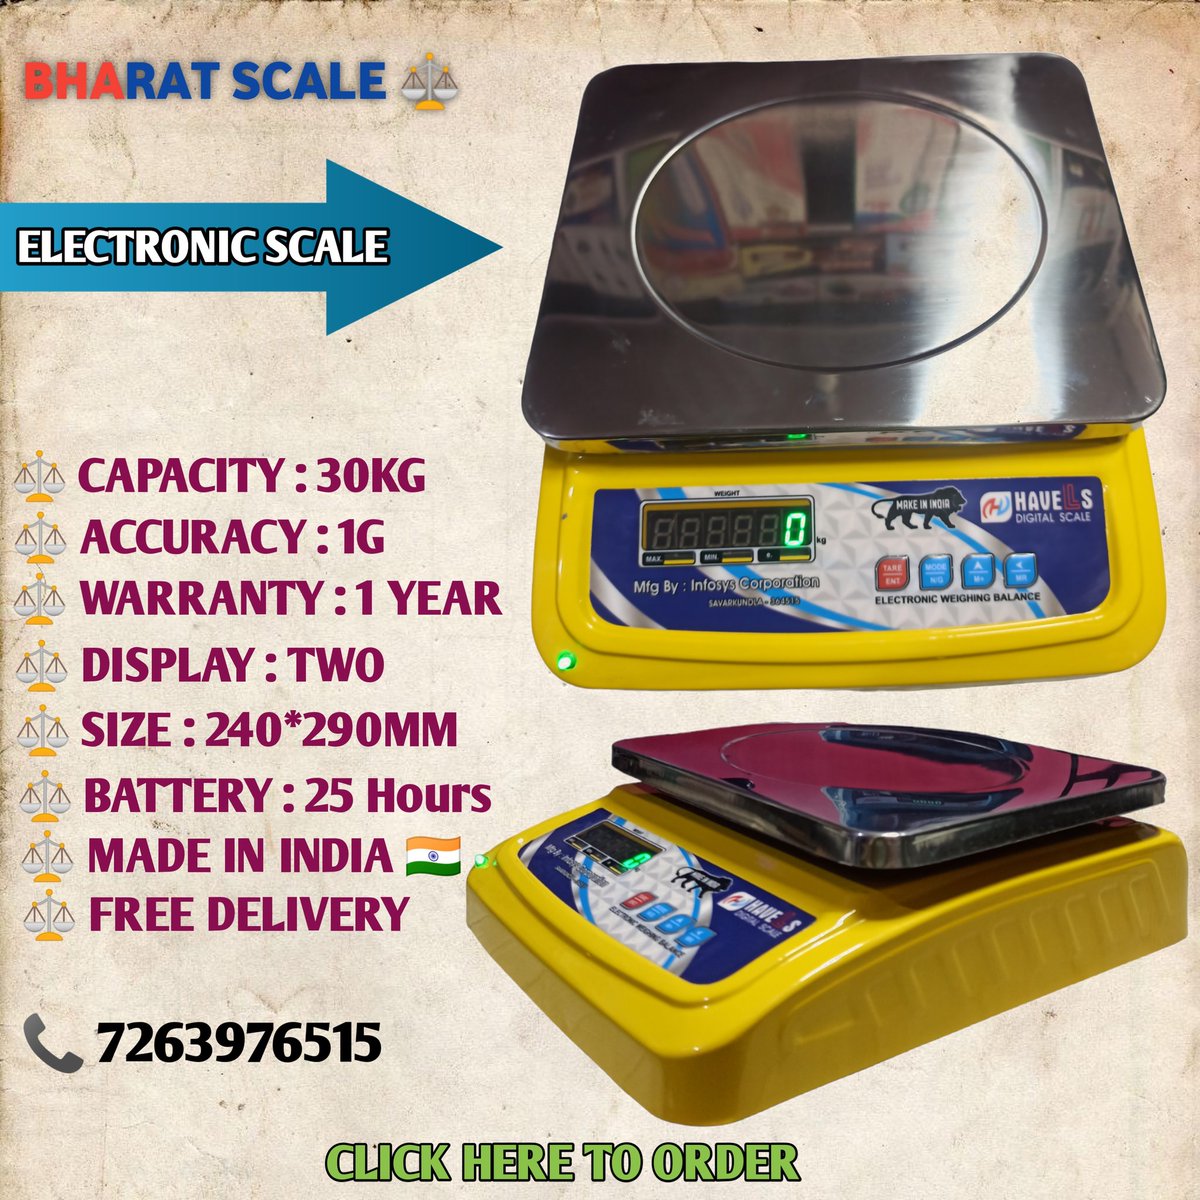 Available At Best Price

Bharat Scale Company Parbhani 

#Scale #ElectronicScale #kata #vazankata #parbhani #परभणी